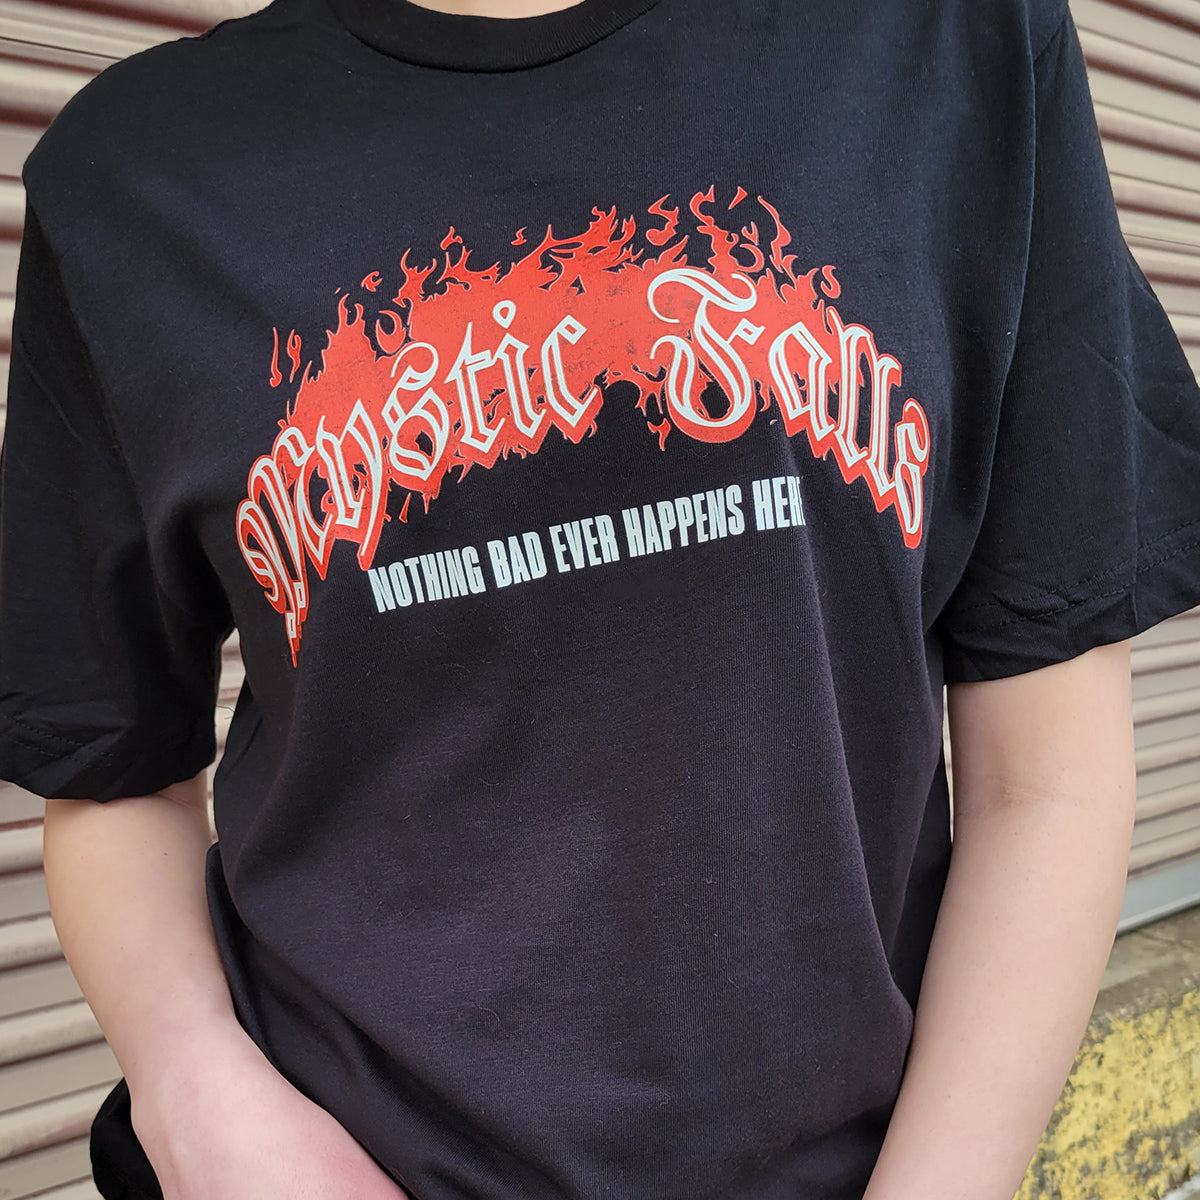 Mystic Falls T-Shirt T-Shirt